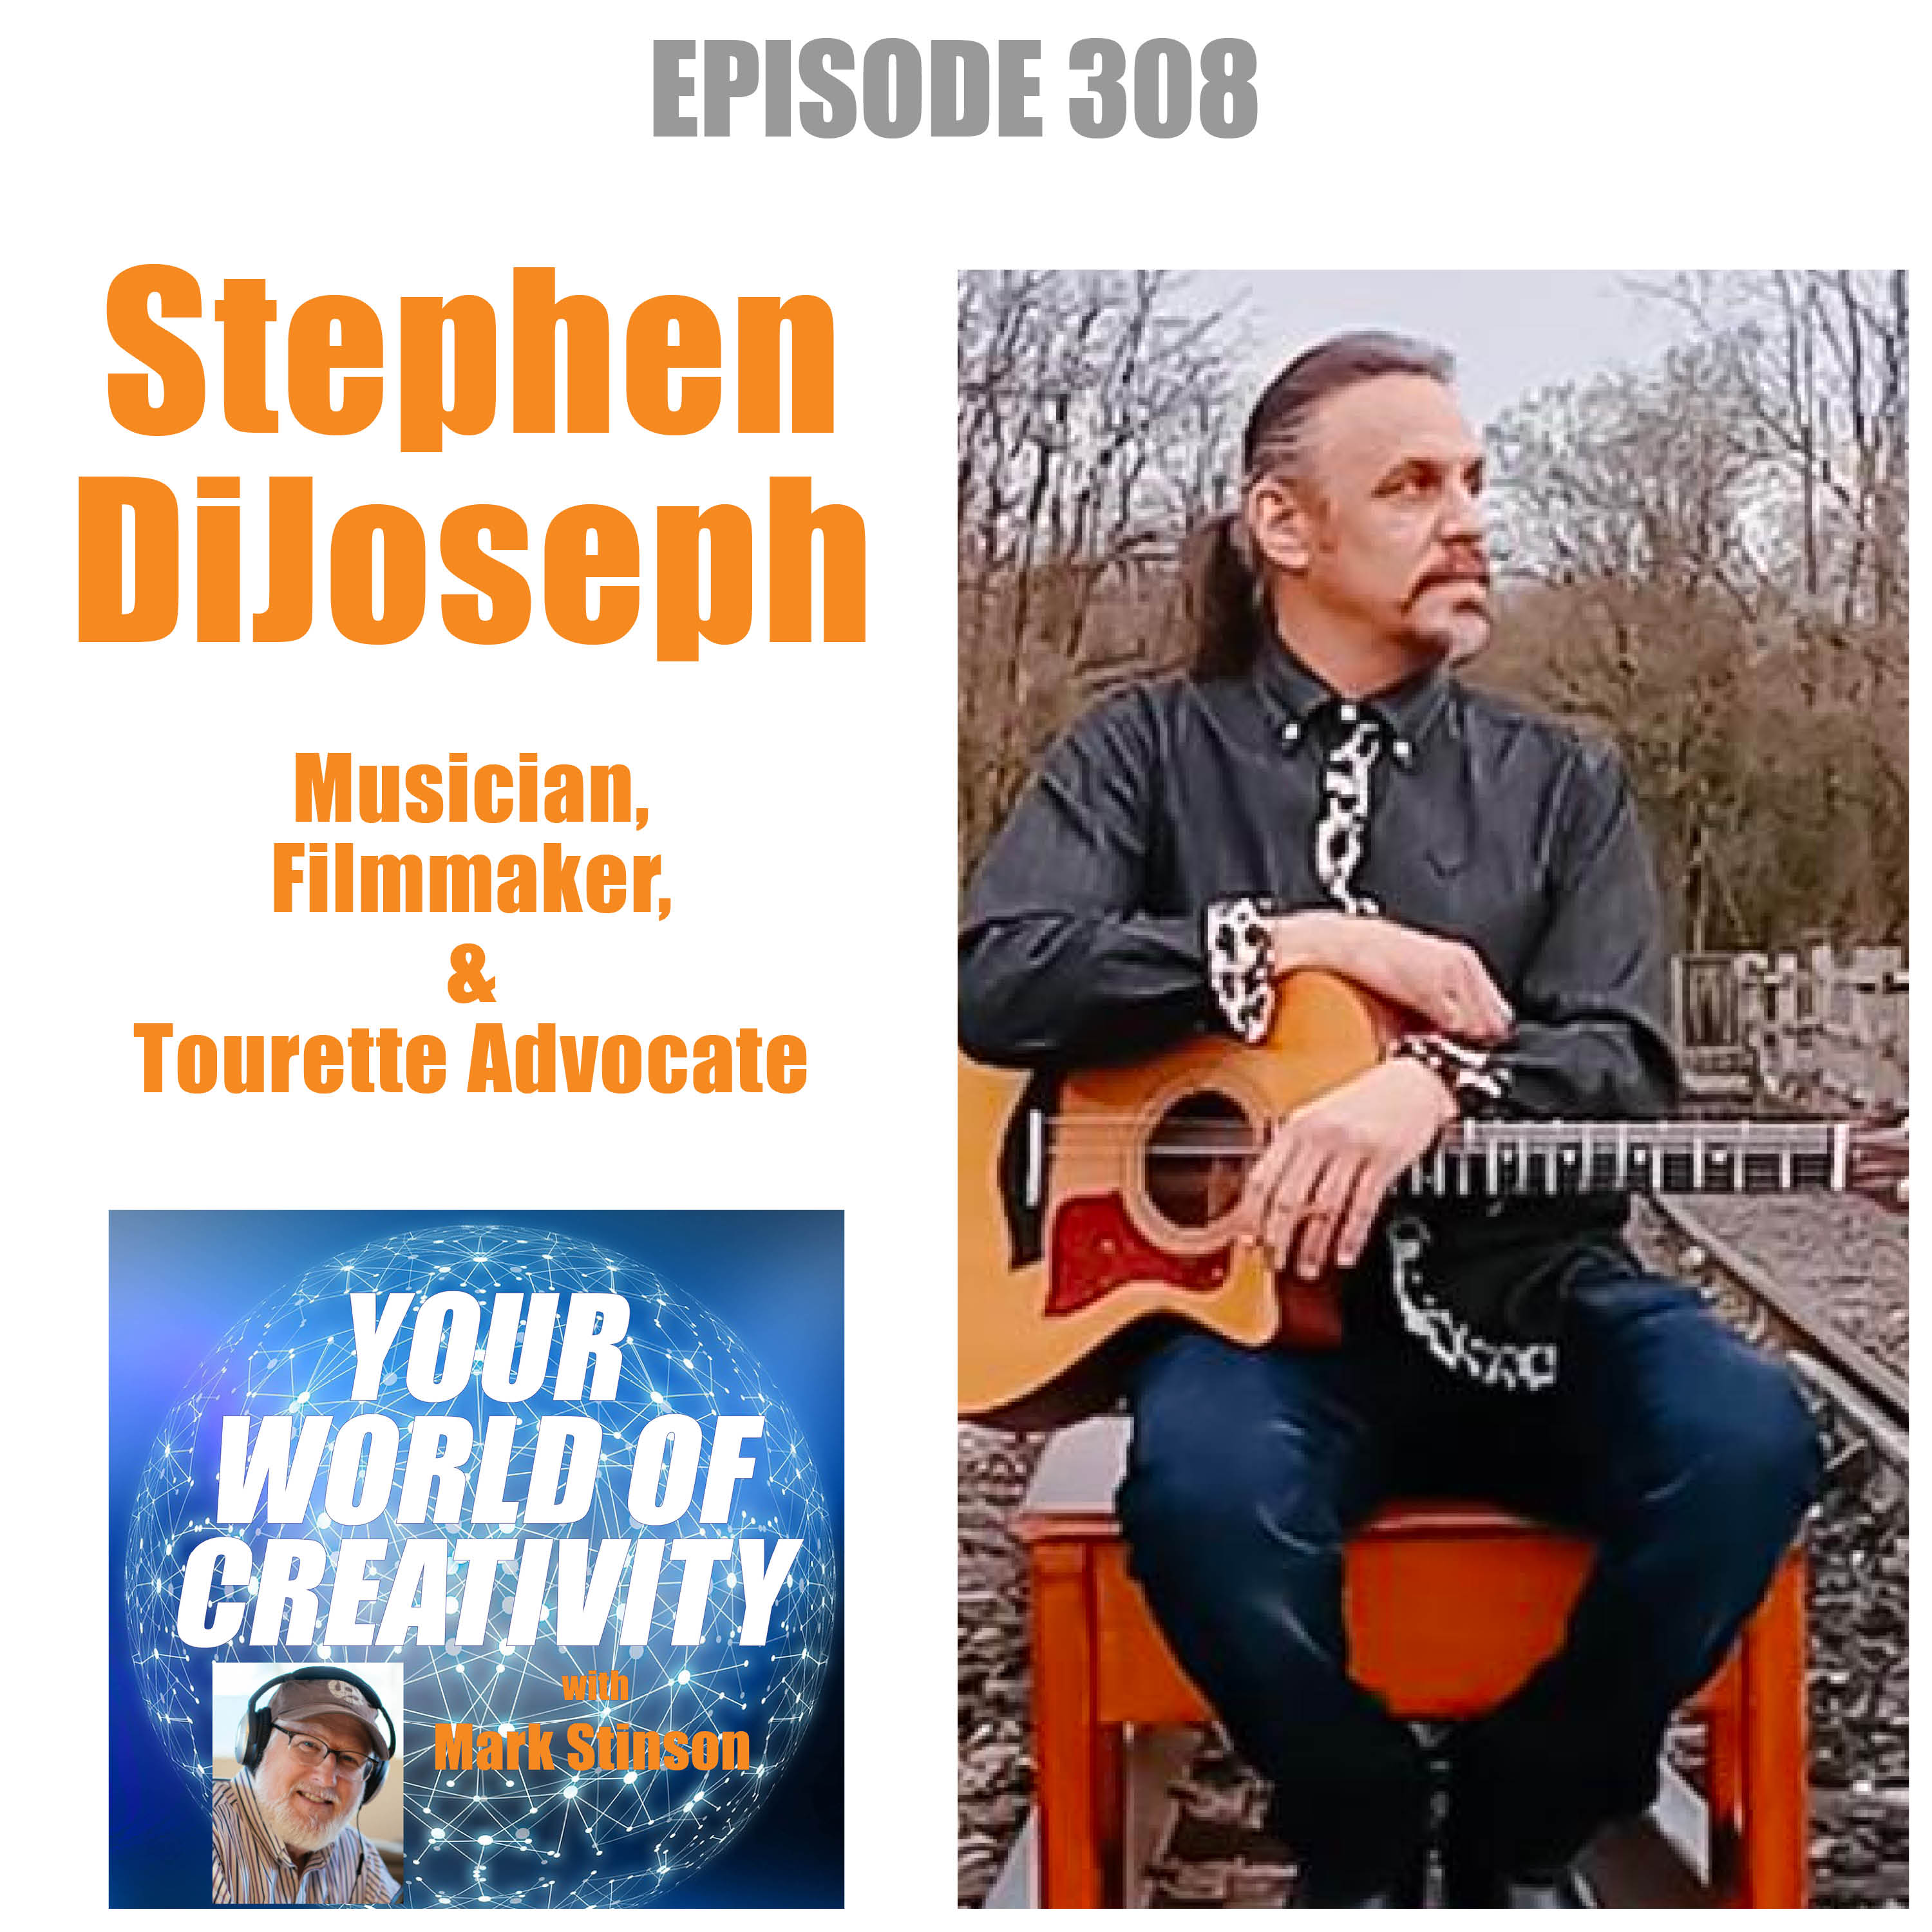 Stephen DiJoseph, Musician, Filmmaker, and Tourette Advocate